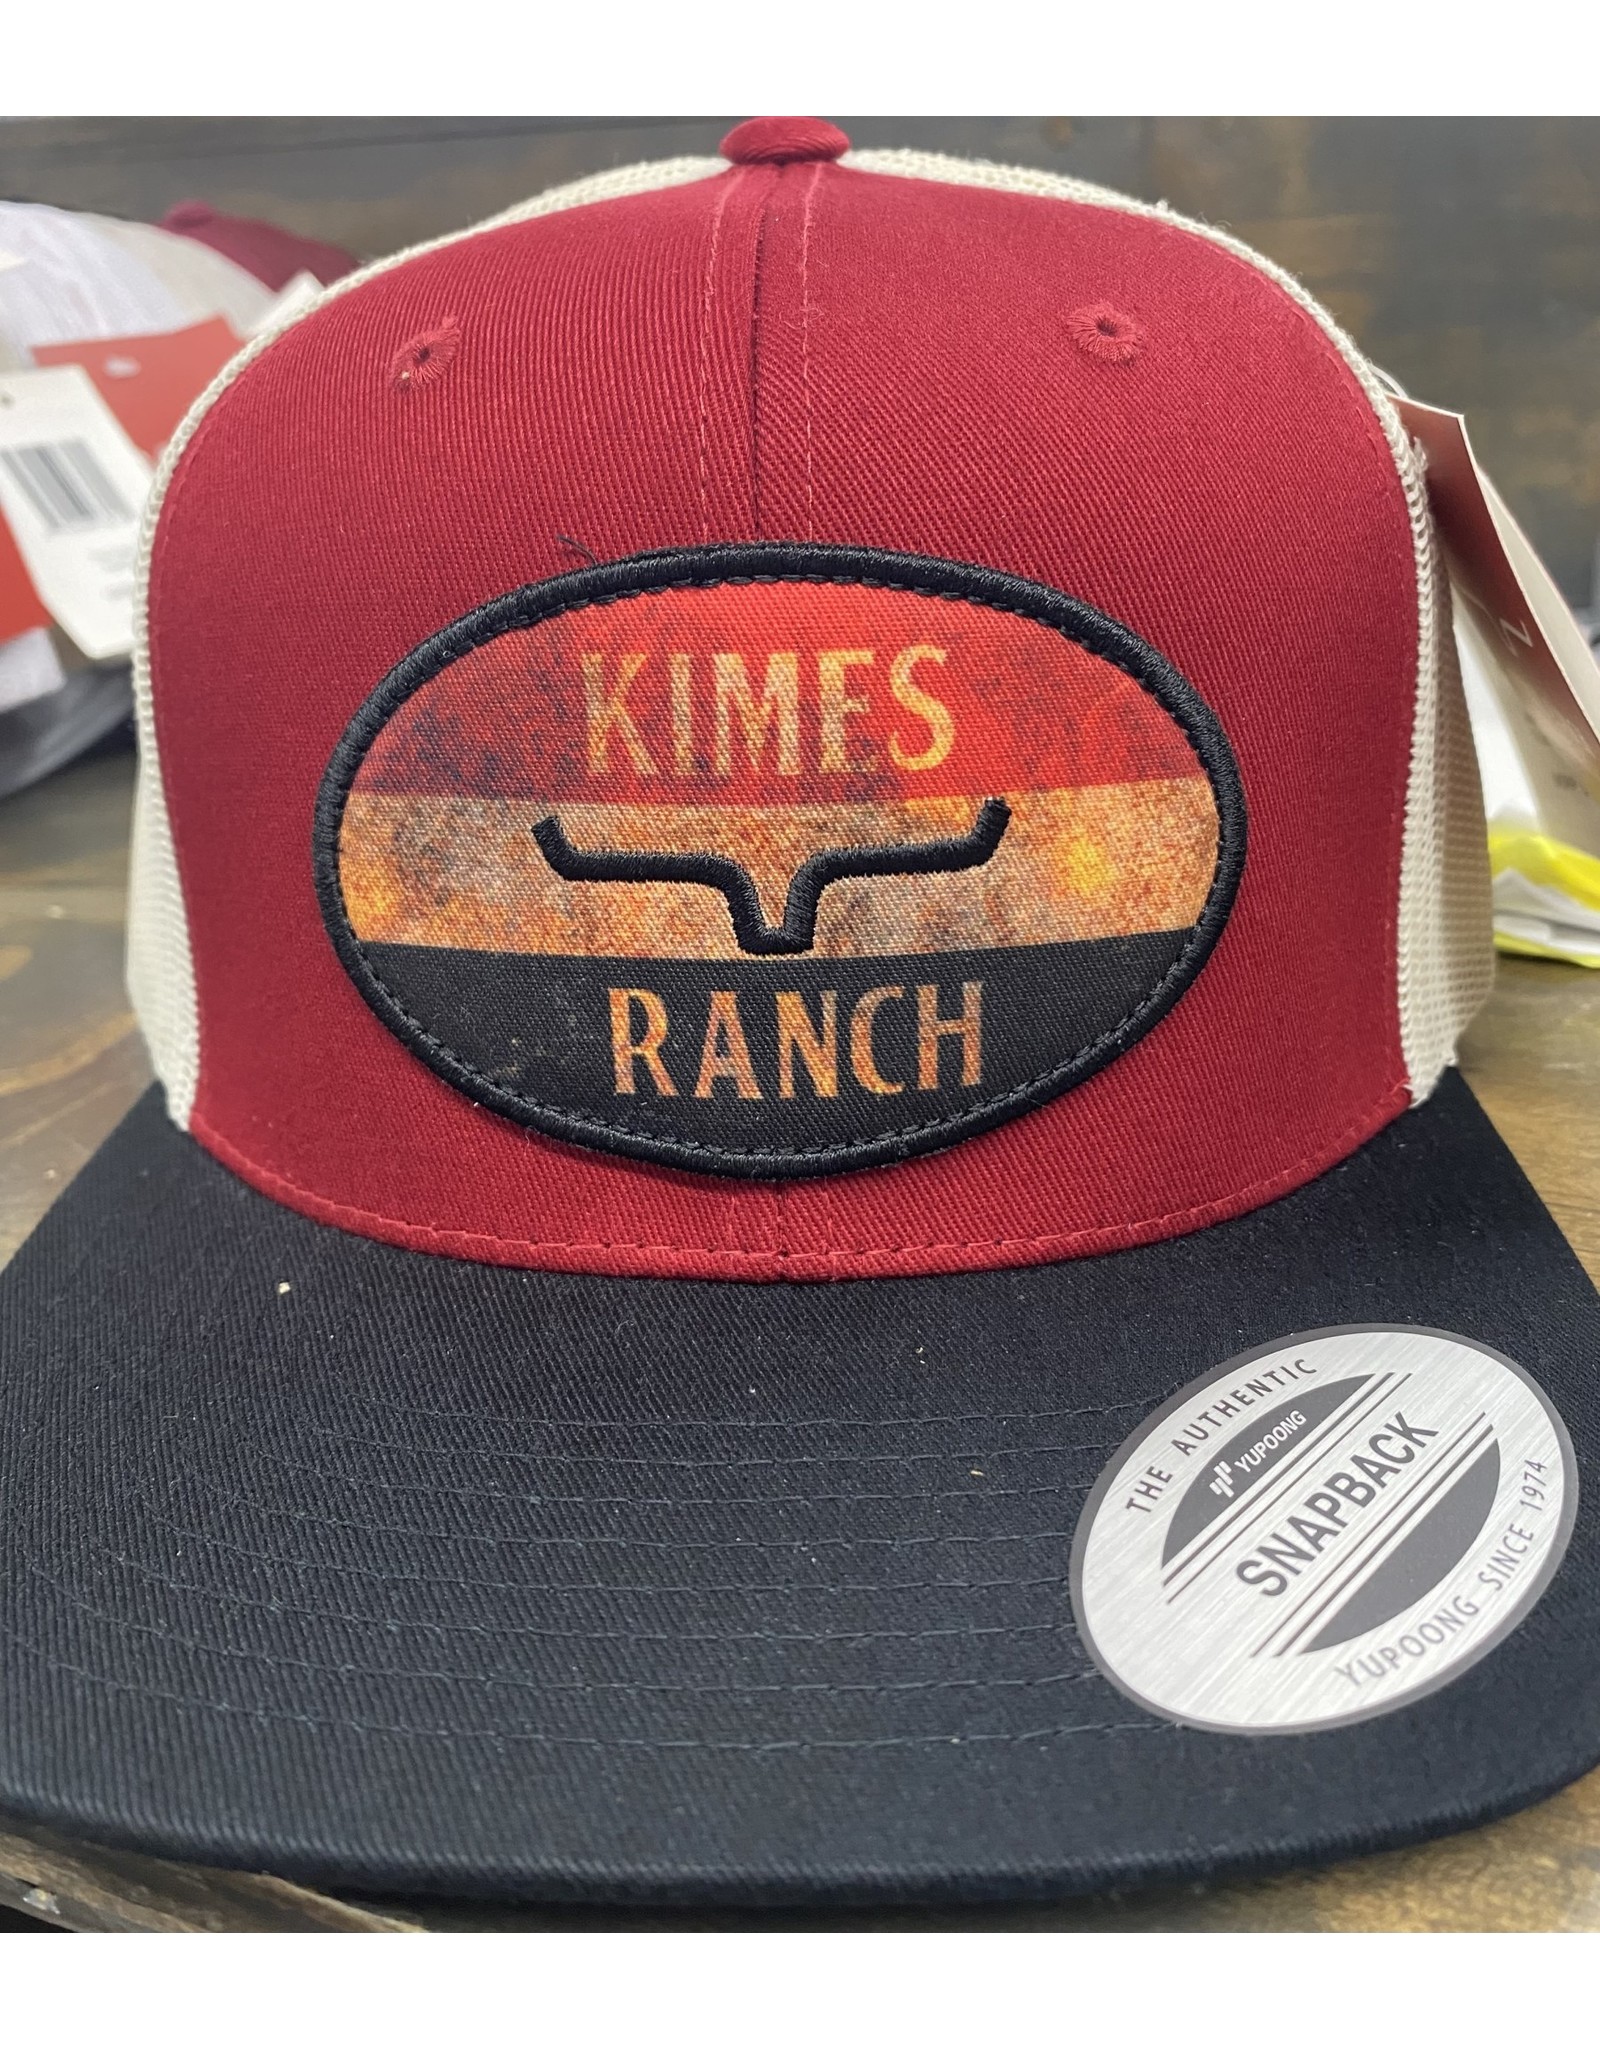 Kimes Ranch American Standard Dark Red Trucker Cap